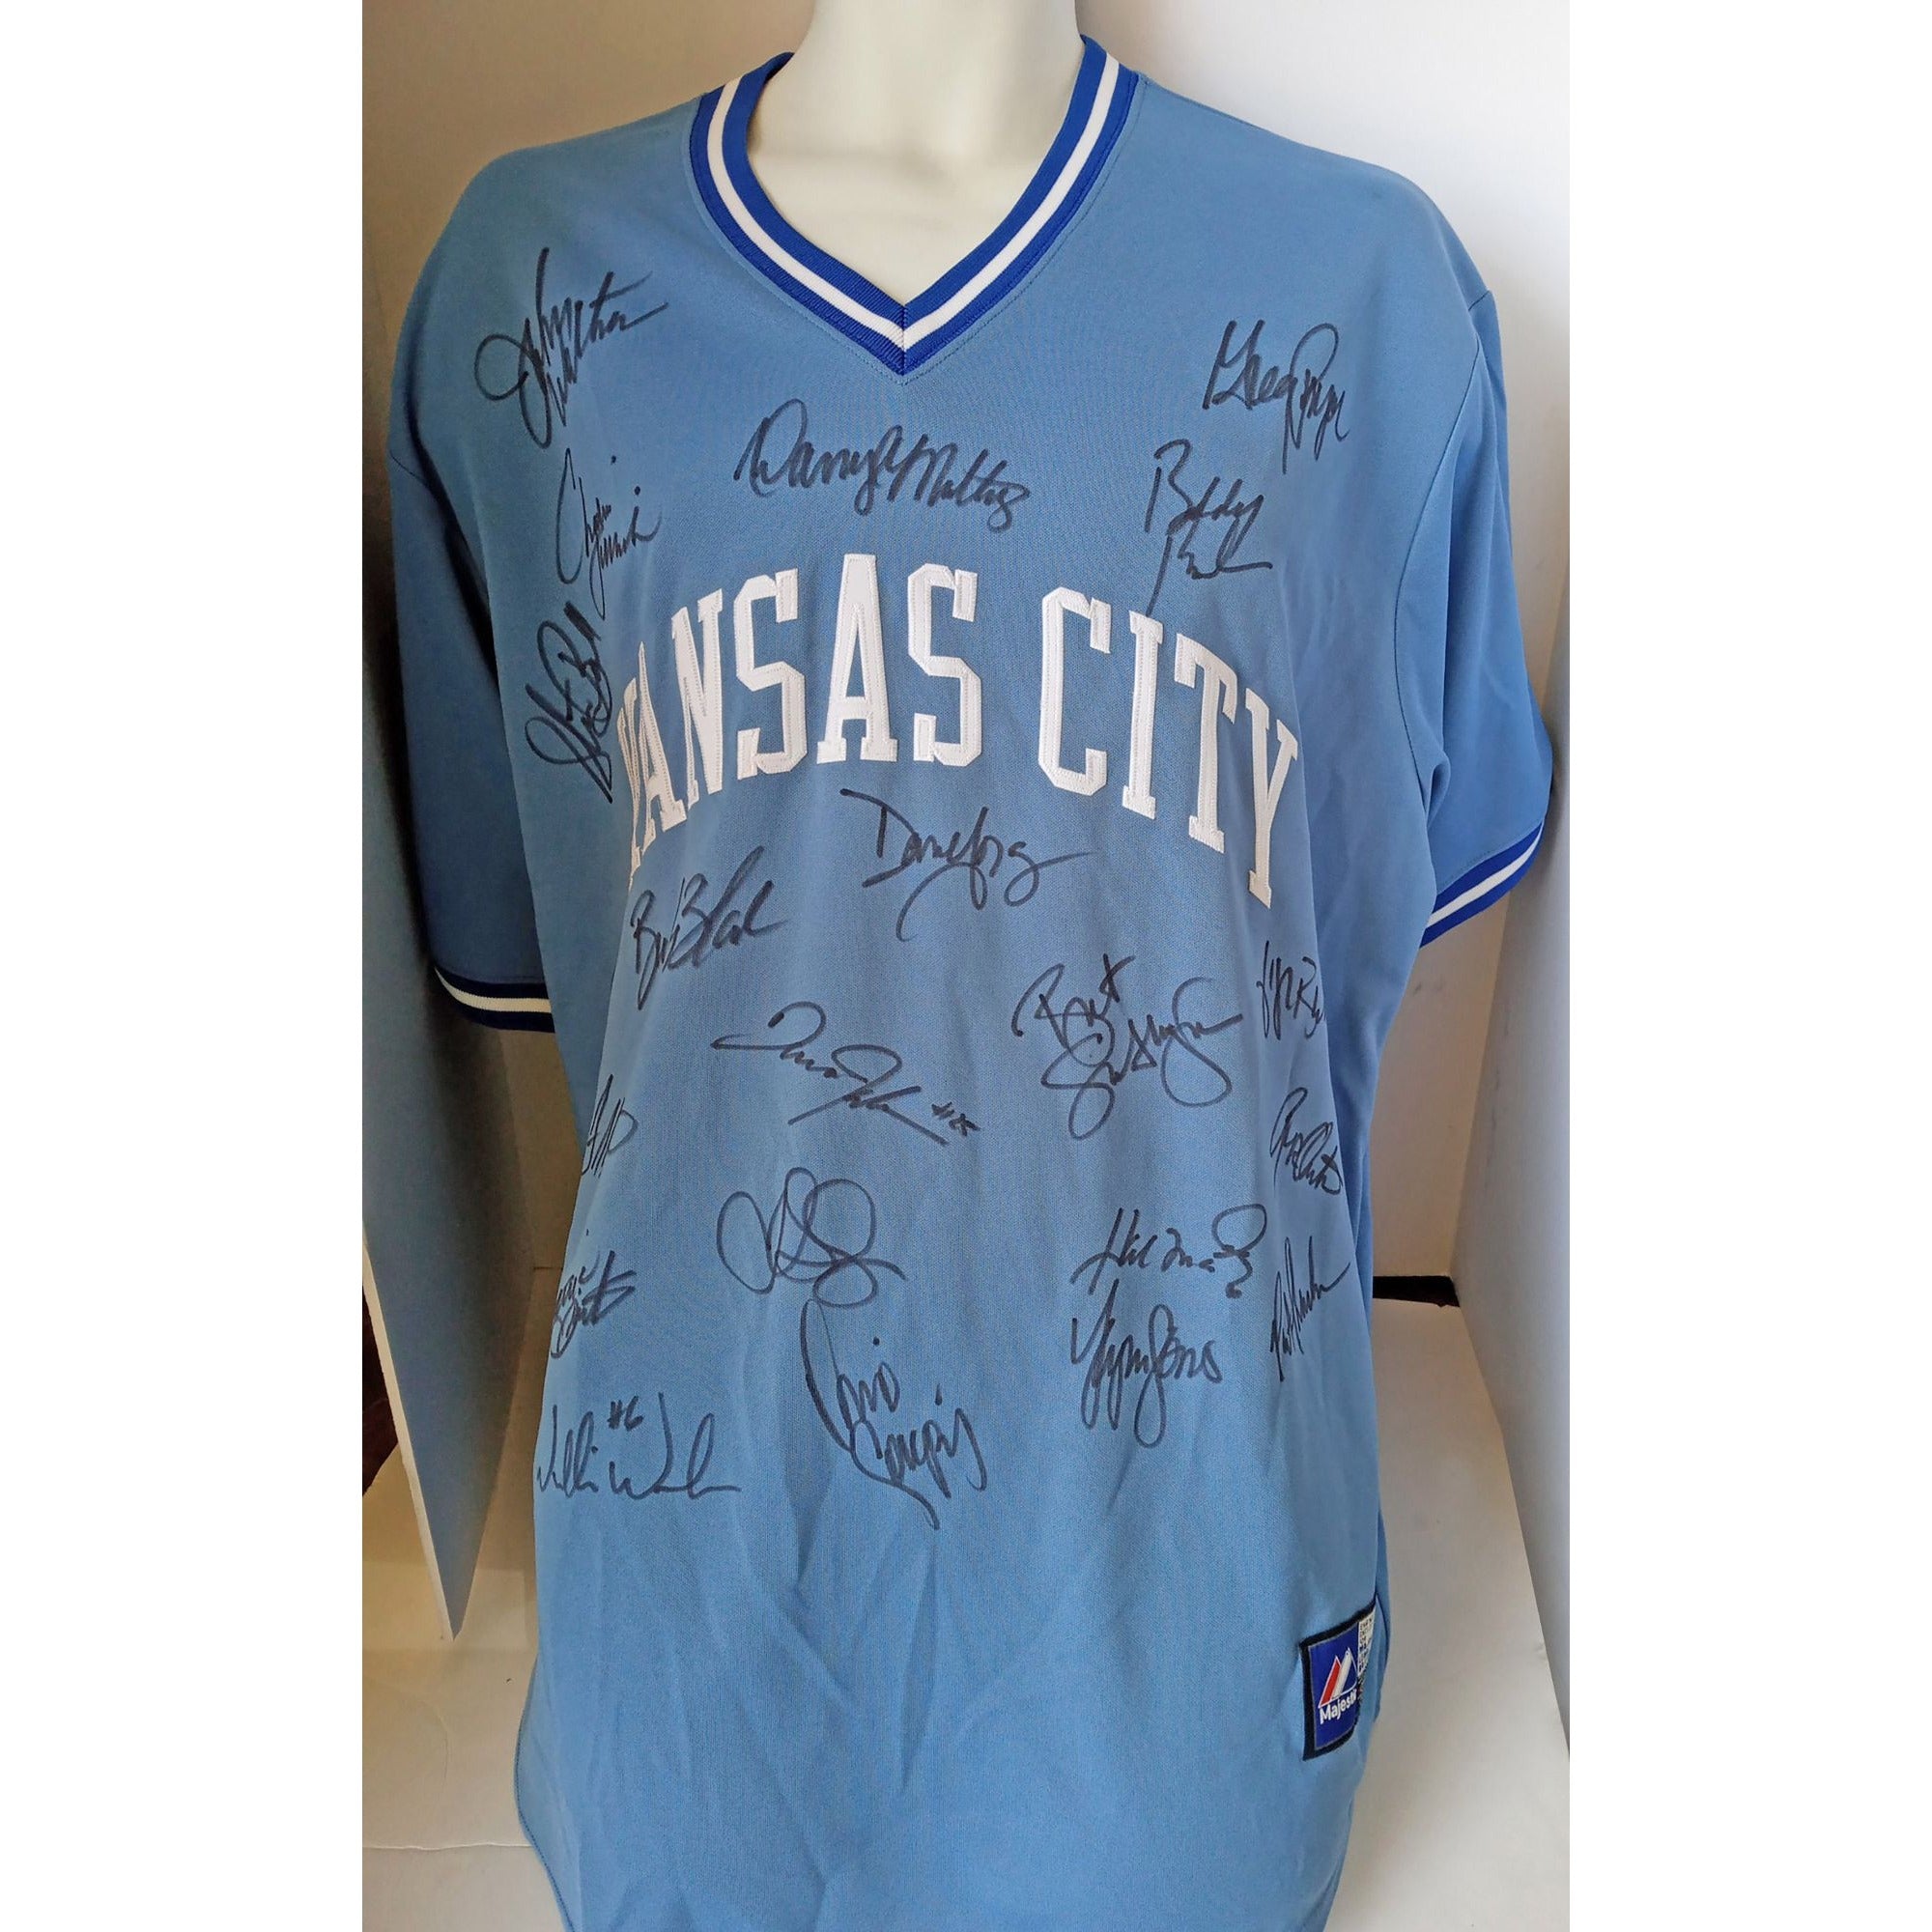 Kansas City Royals T-Shirts in Kansas City Royals Team Shop